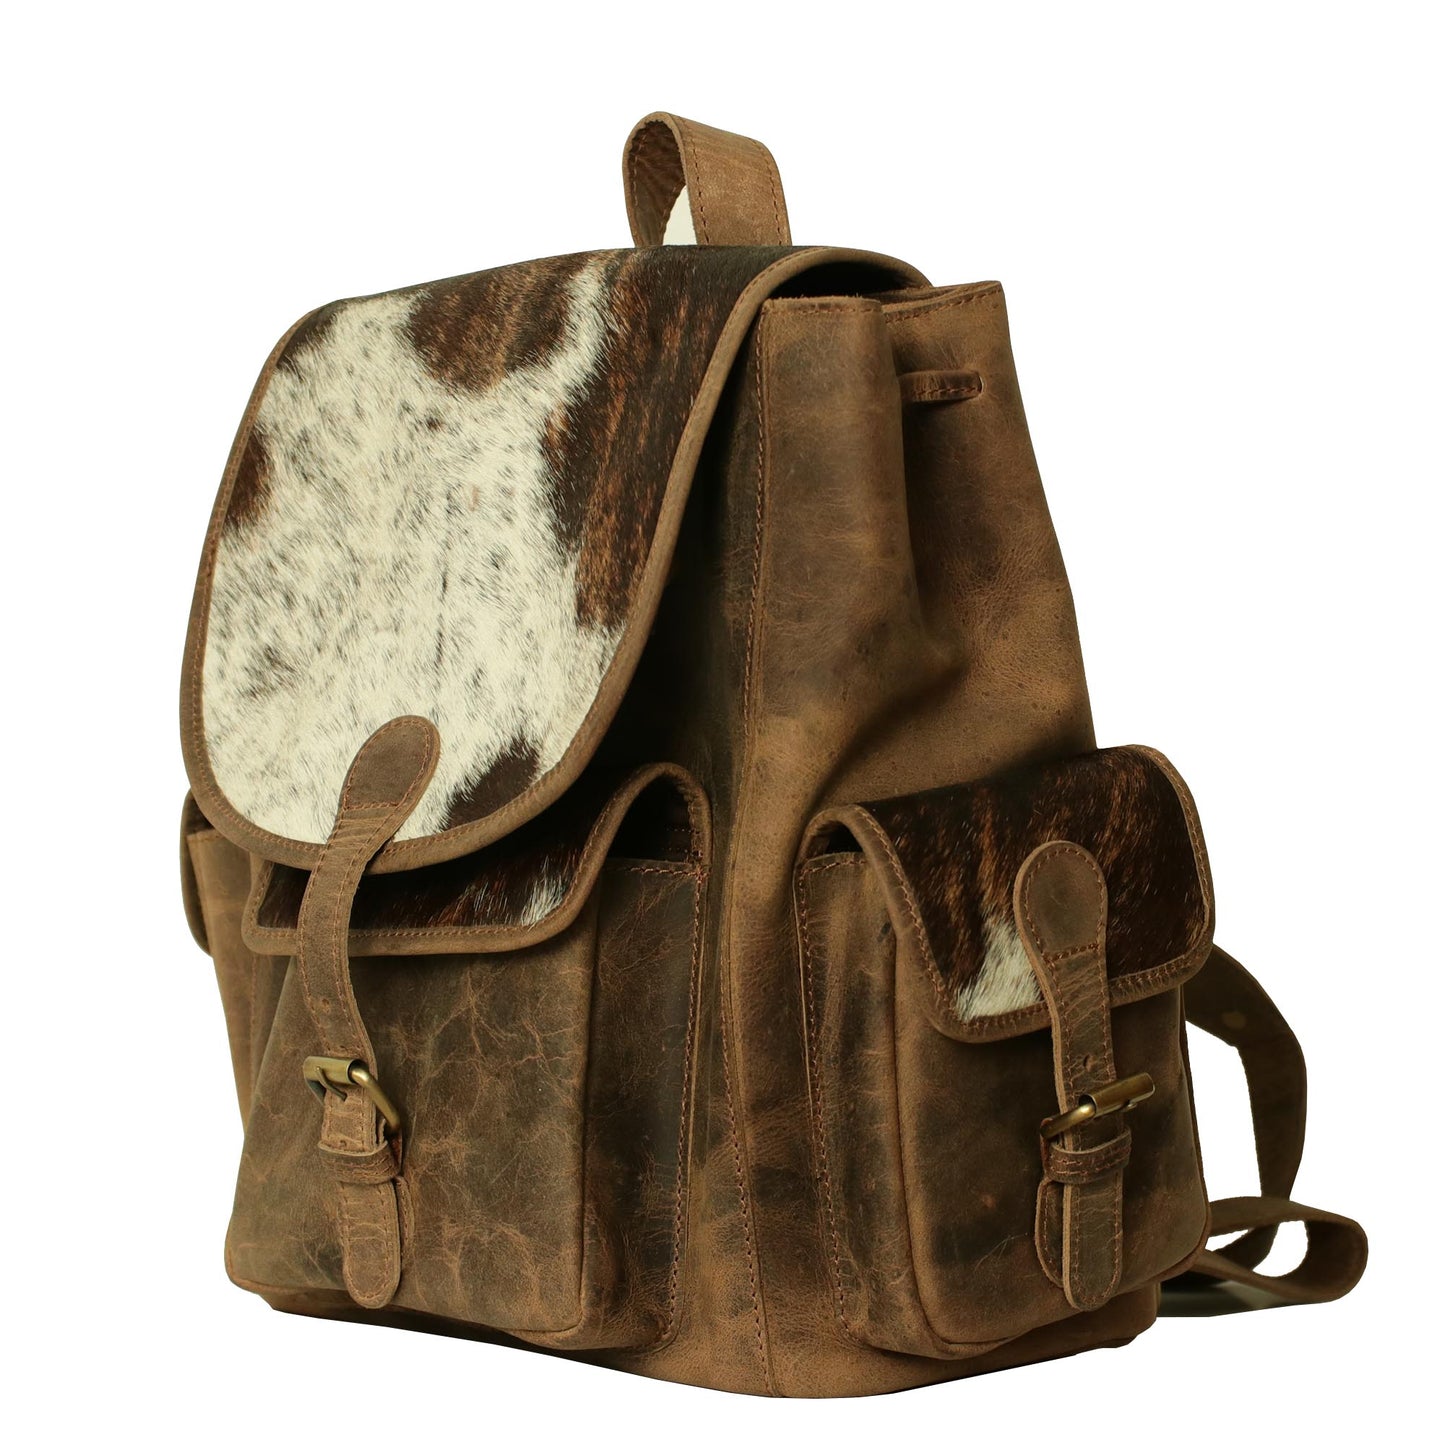 Unisex Leather Backpack for Travel, Mens Backpack, Women Backpack Leather, Traveling Leather Bag, Travel Backpack, Leather Drawstring Bag